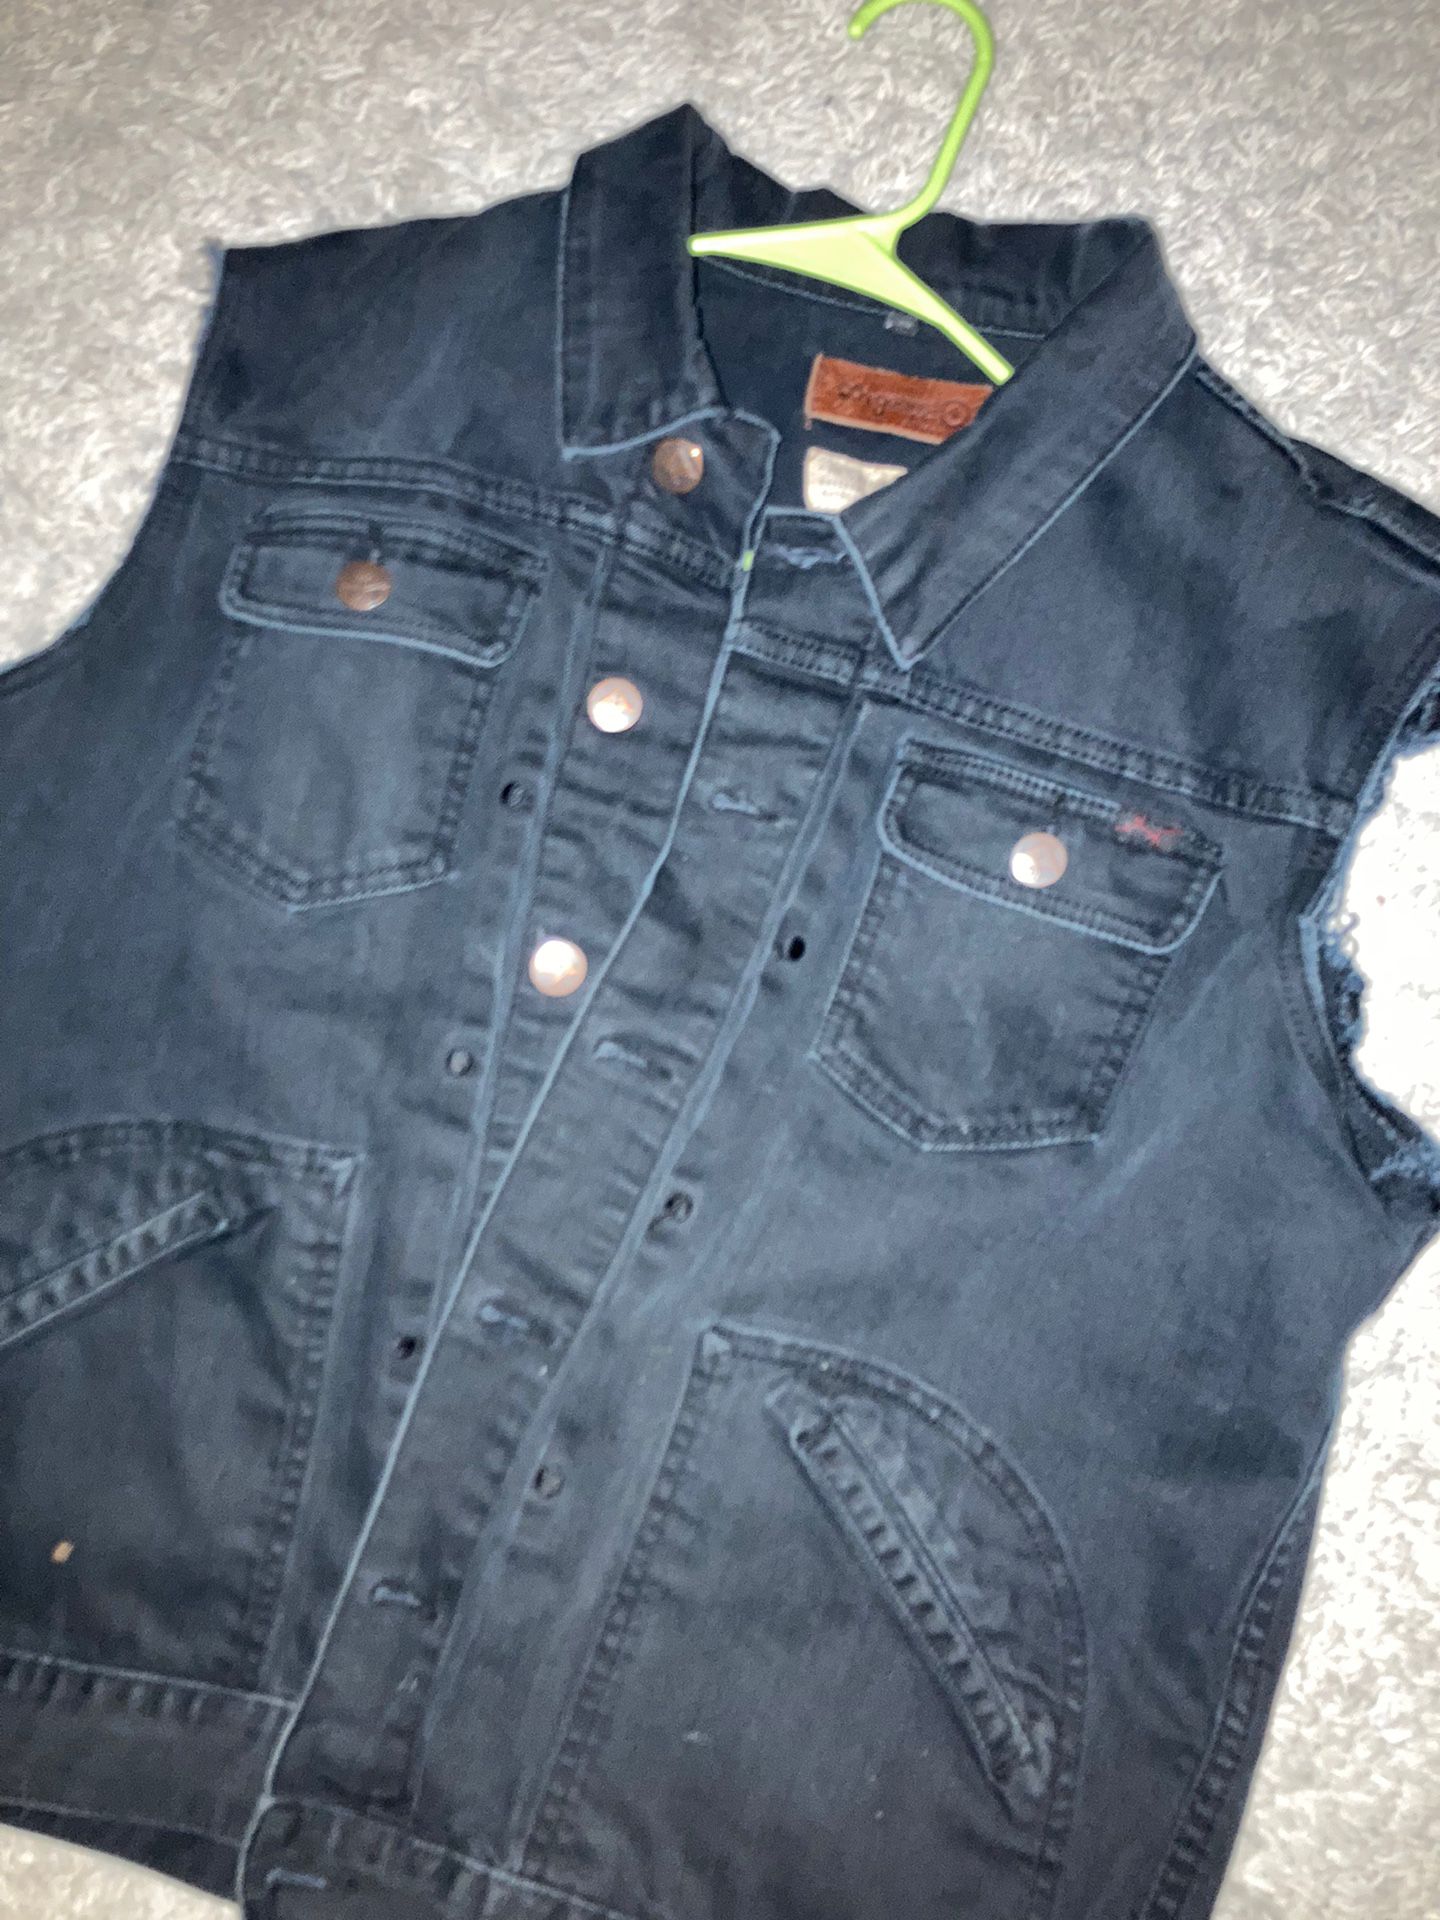 Lrg Black Cutoff Jean Vest (rare)